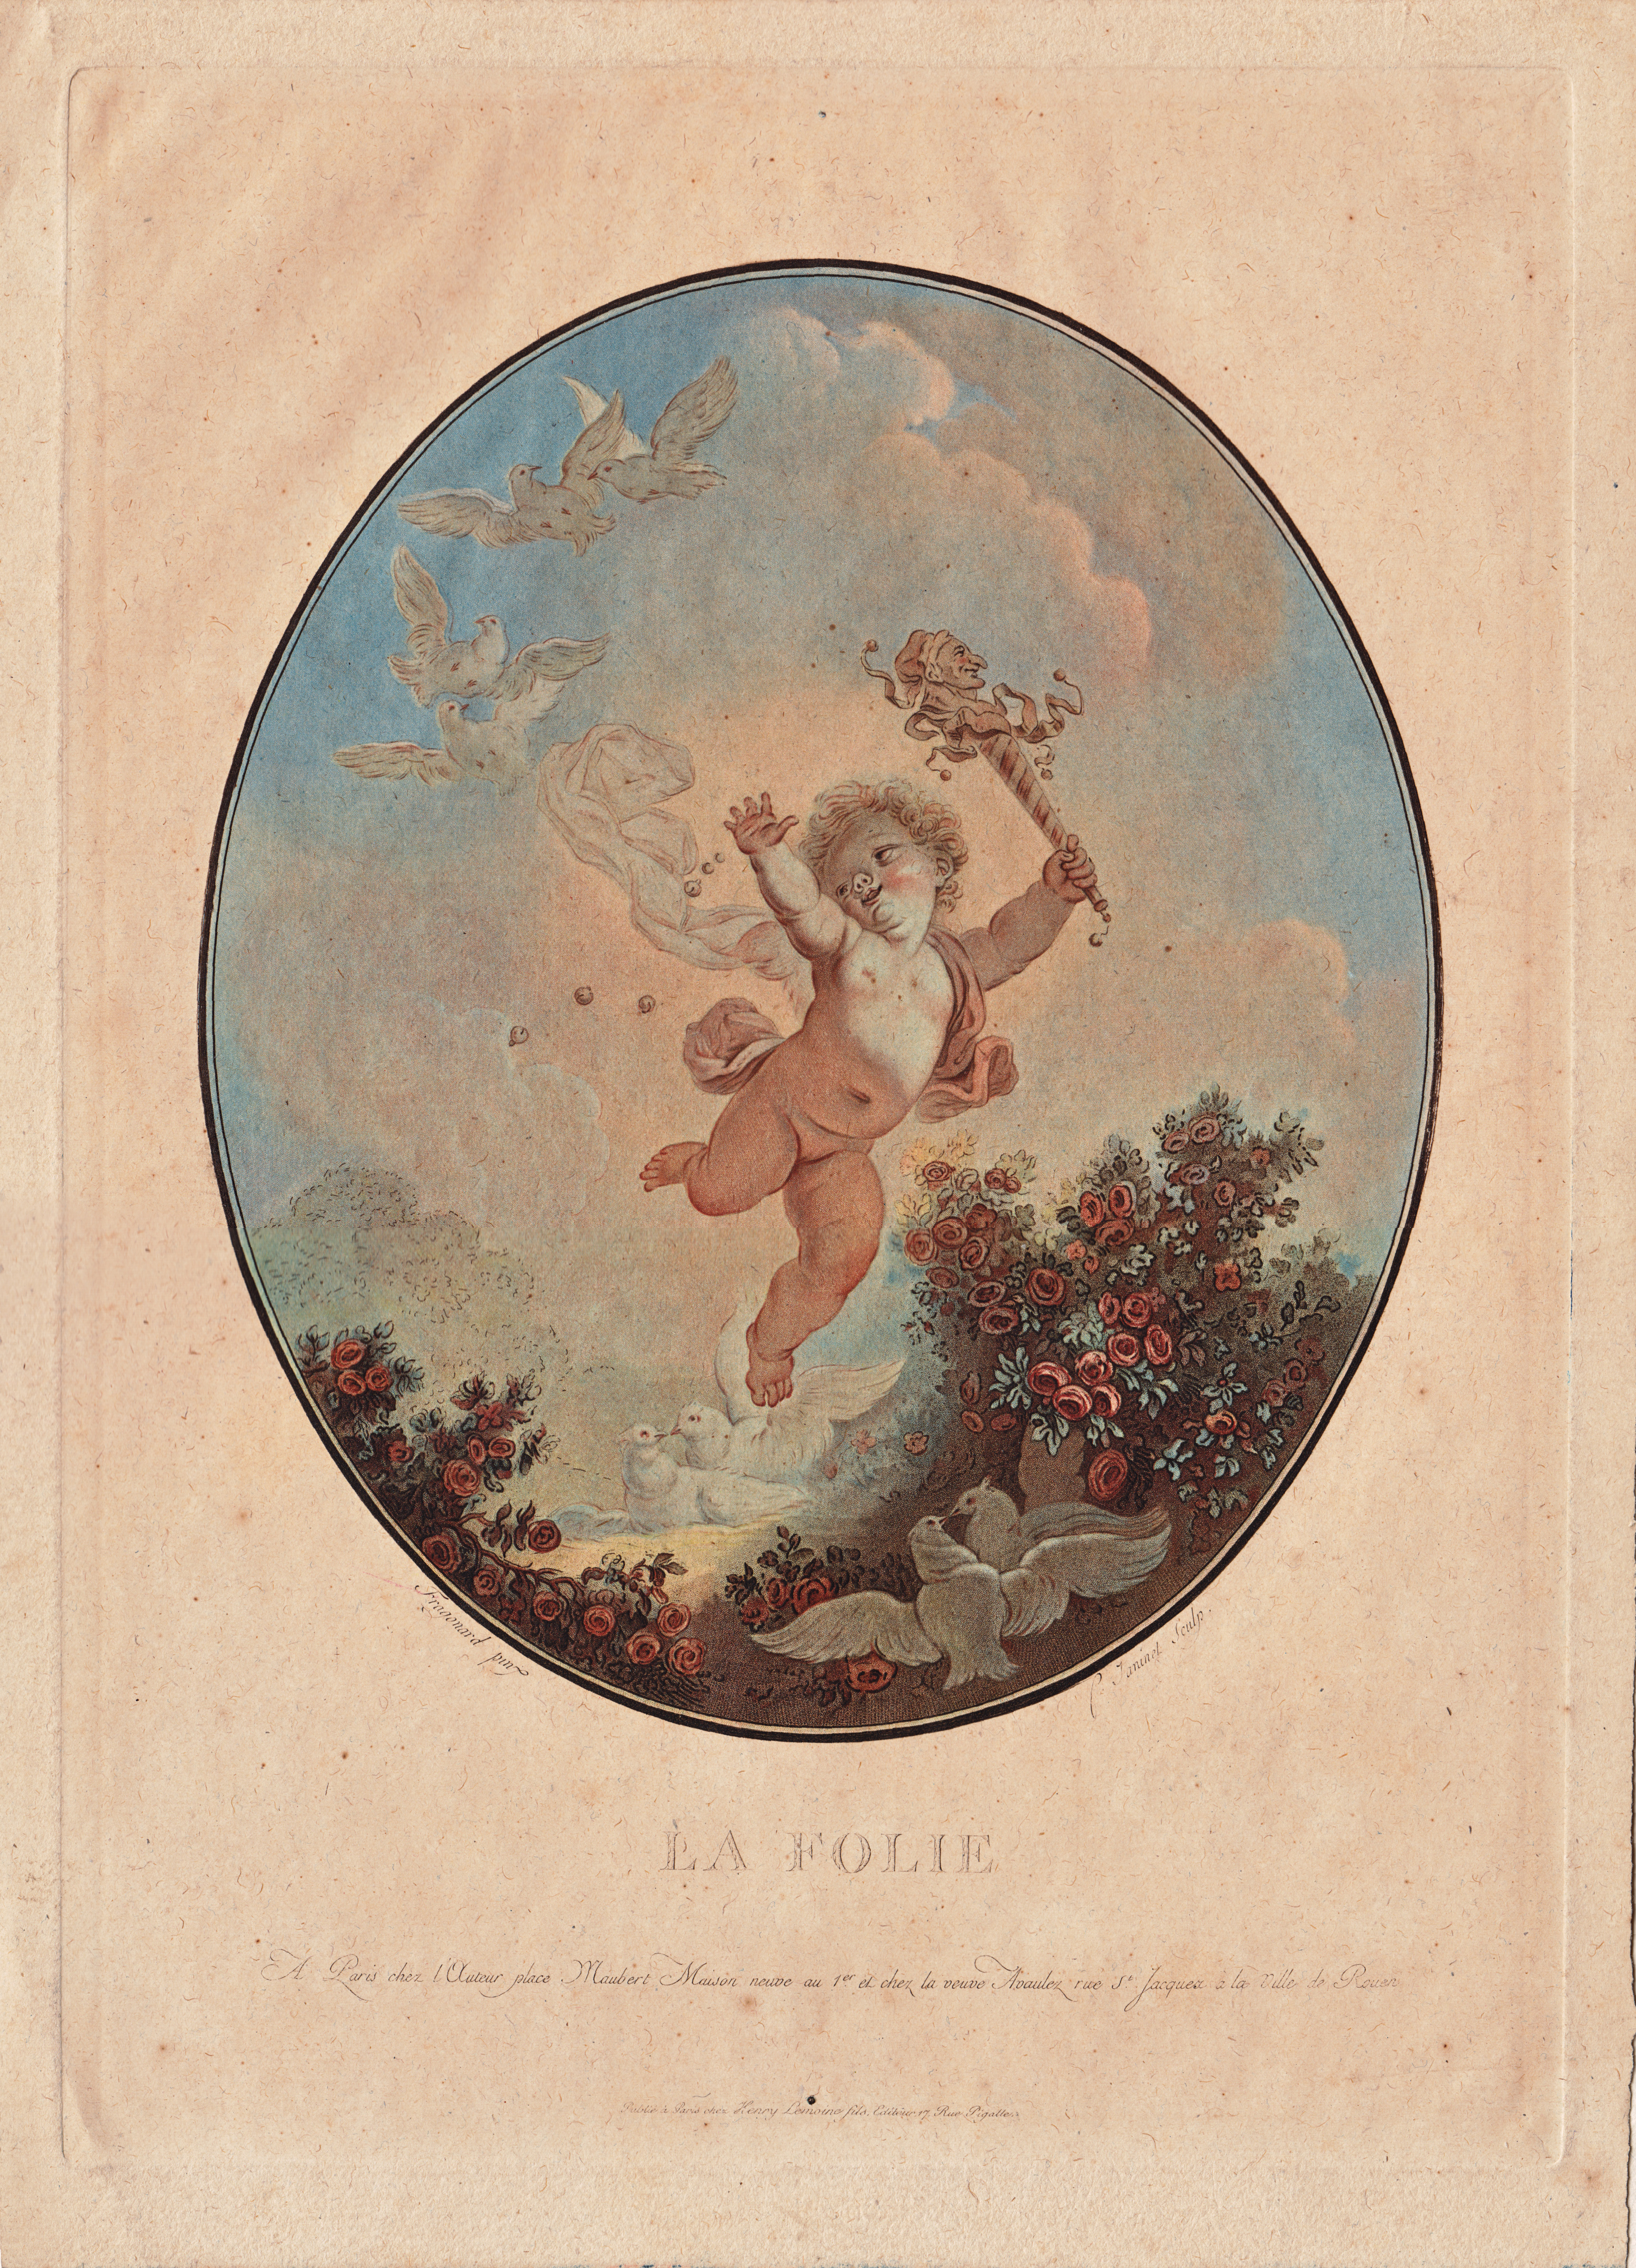 Jean-Franois Janinet, La Folie, color engraving and aquatint, 1777